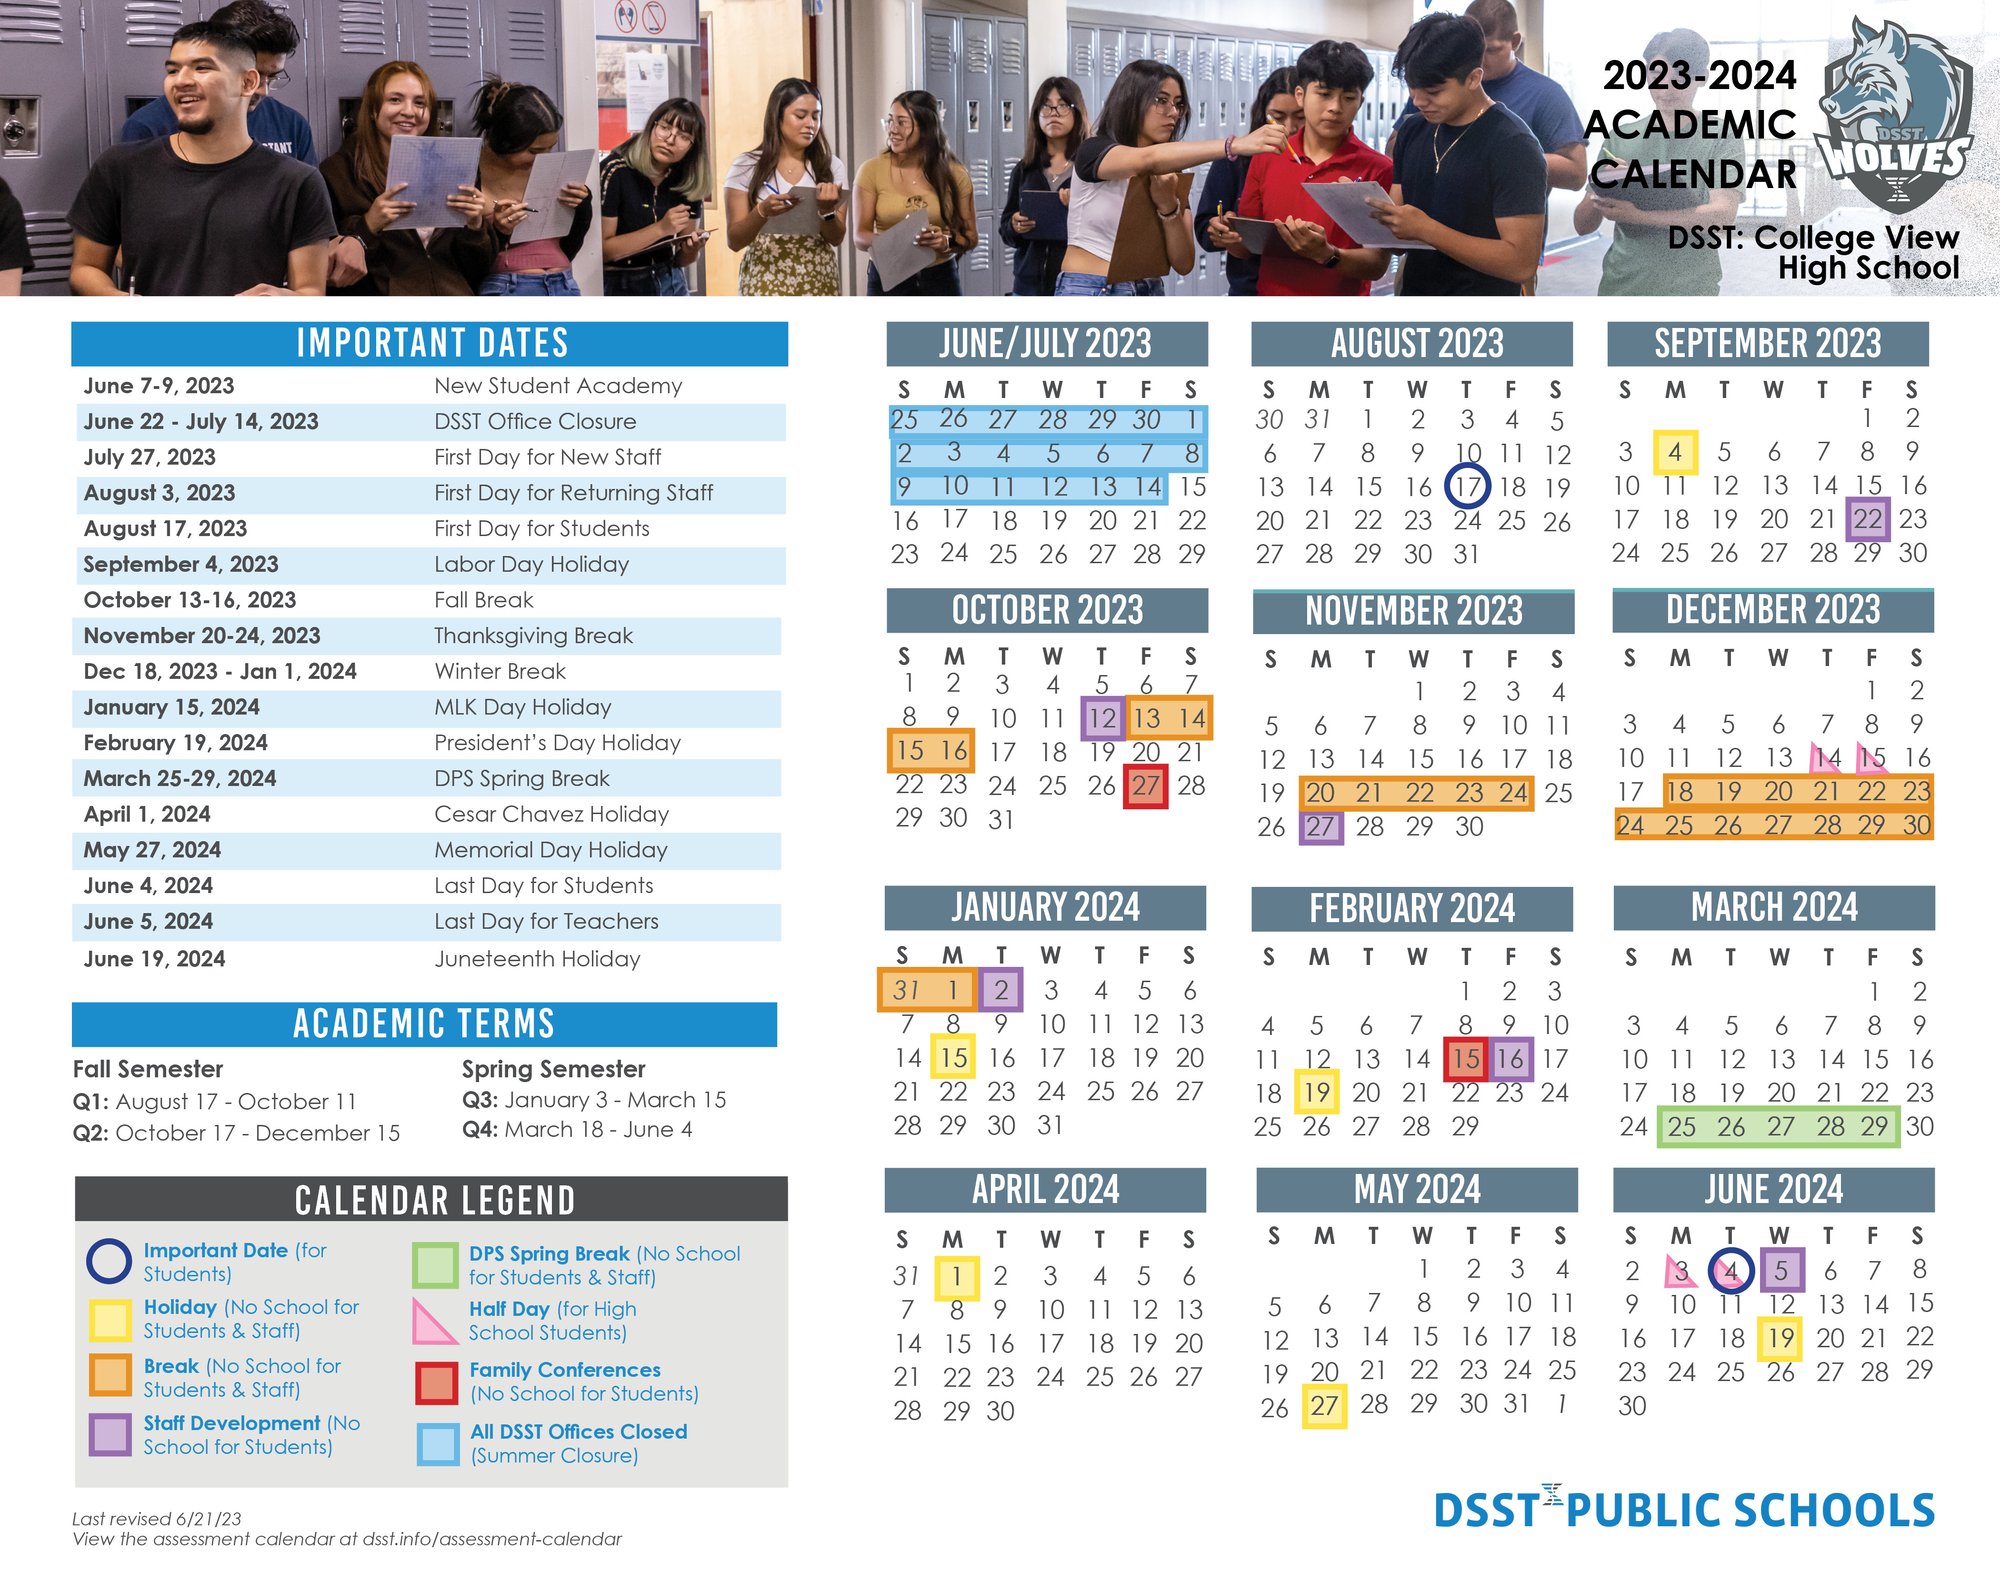 CV HS Calendar 23-24 English and Spanish 6.21.23